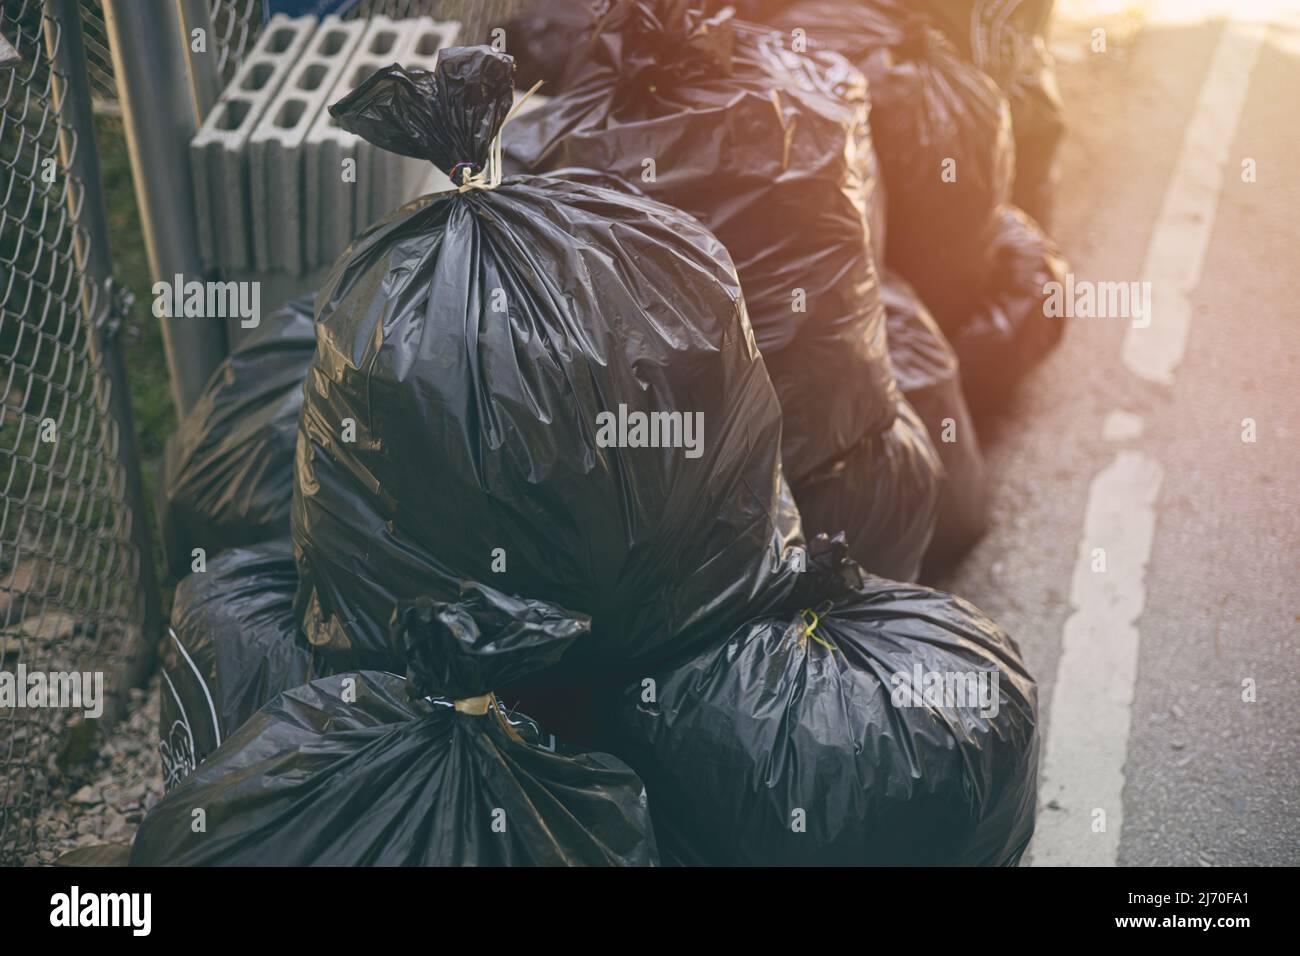 pile of black garbage bags city waste management good hygiene 2J70FA1